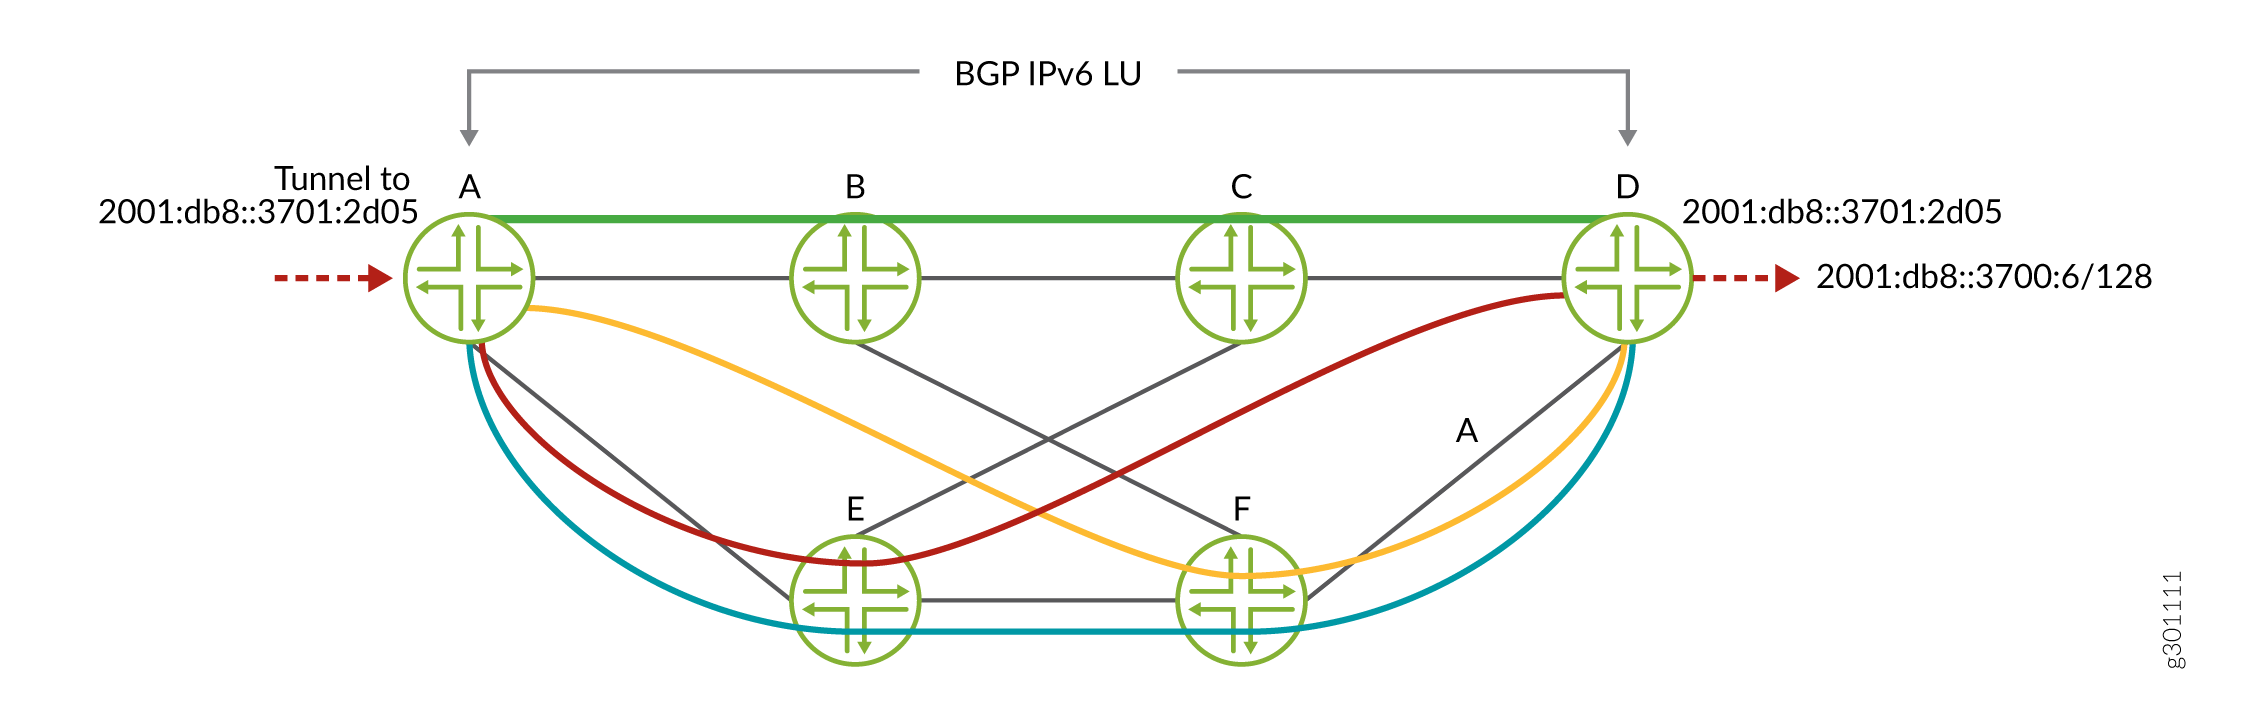 BGP IPv6 LU sur IPv6 SR-TE de couleur